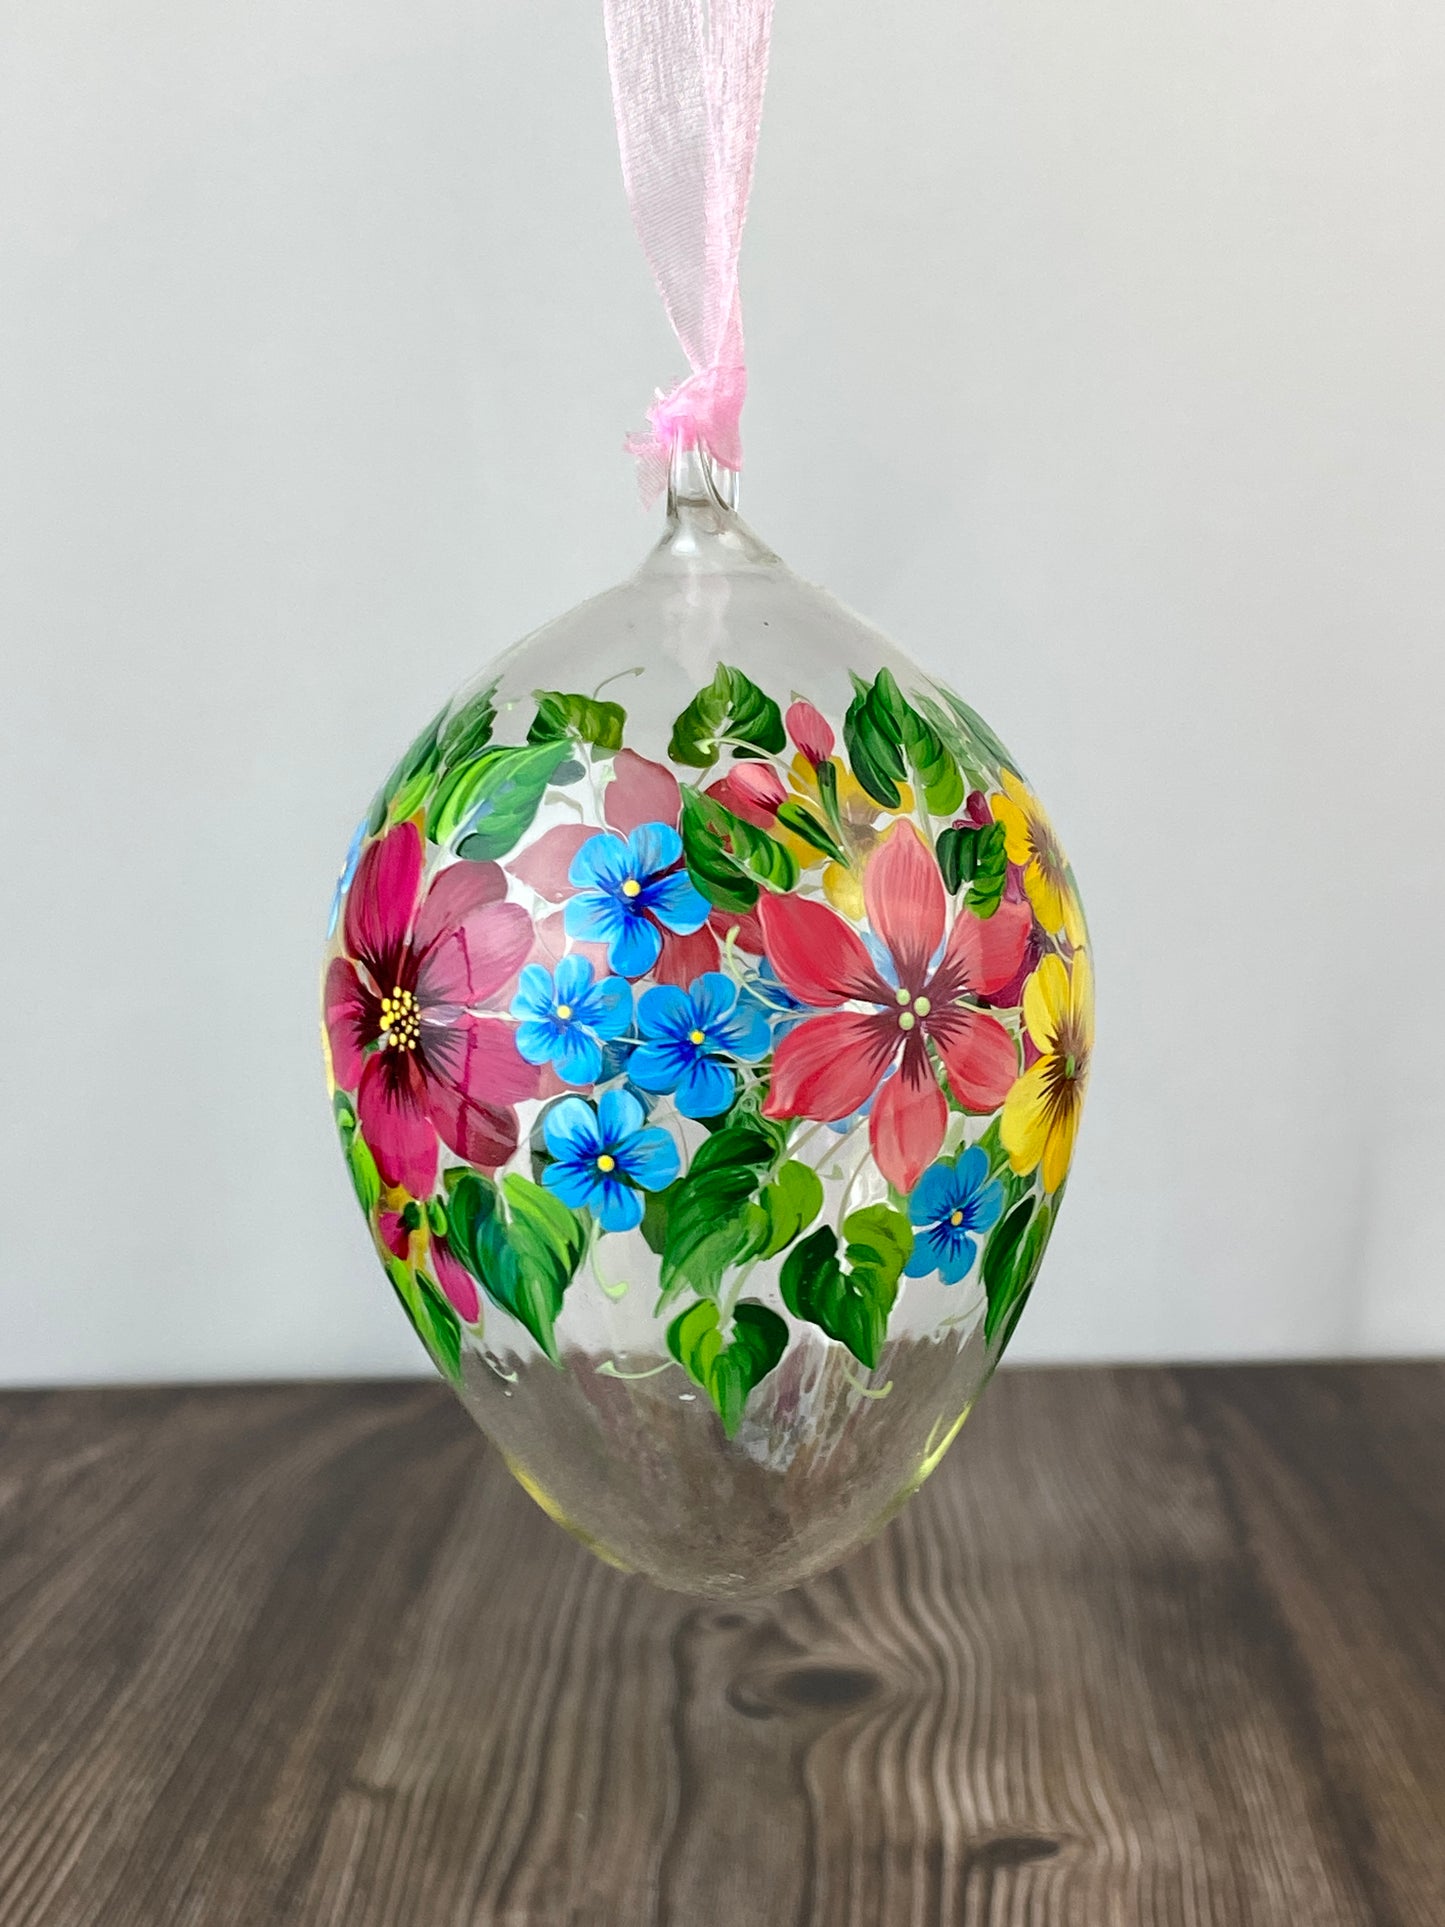 Egg Shaped Glass Ornament - Spring Flowers